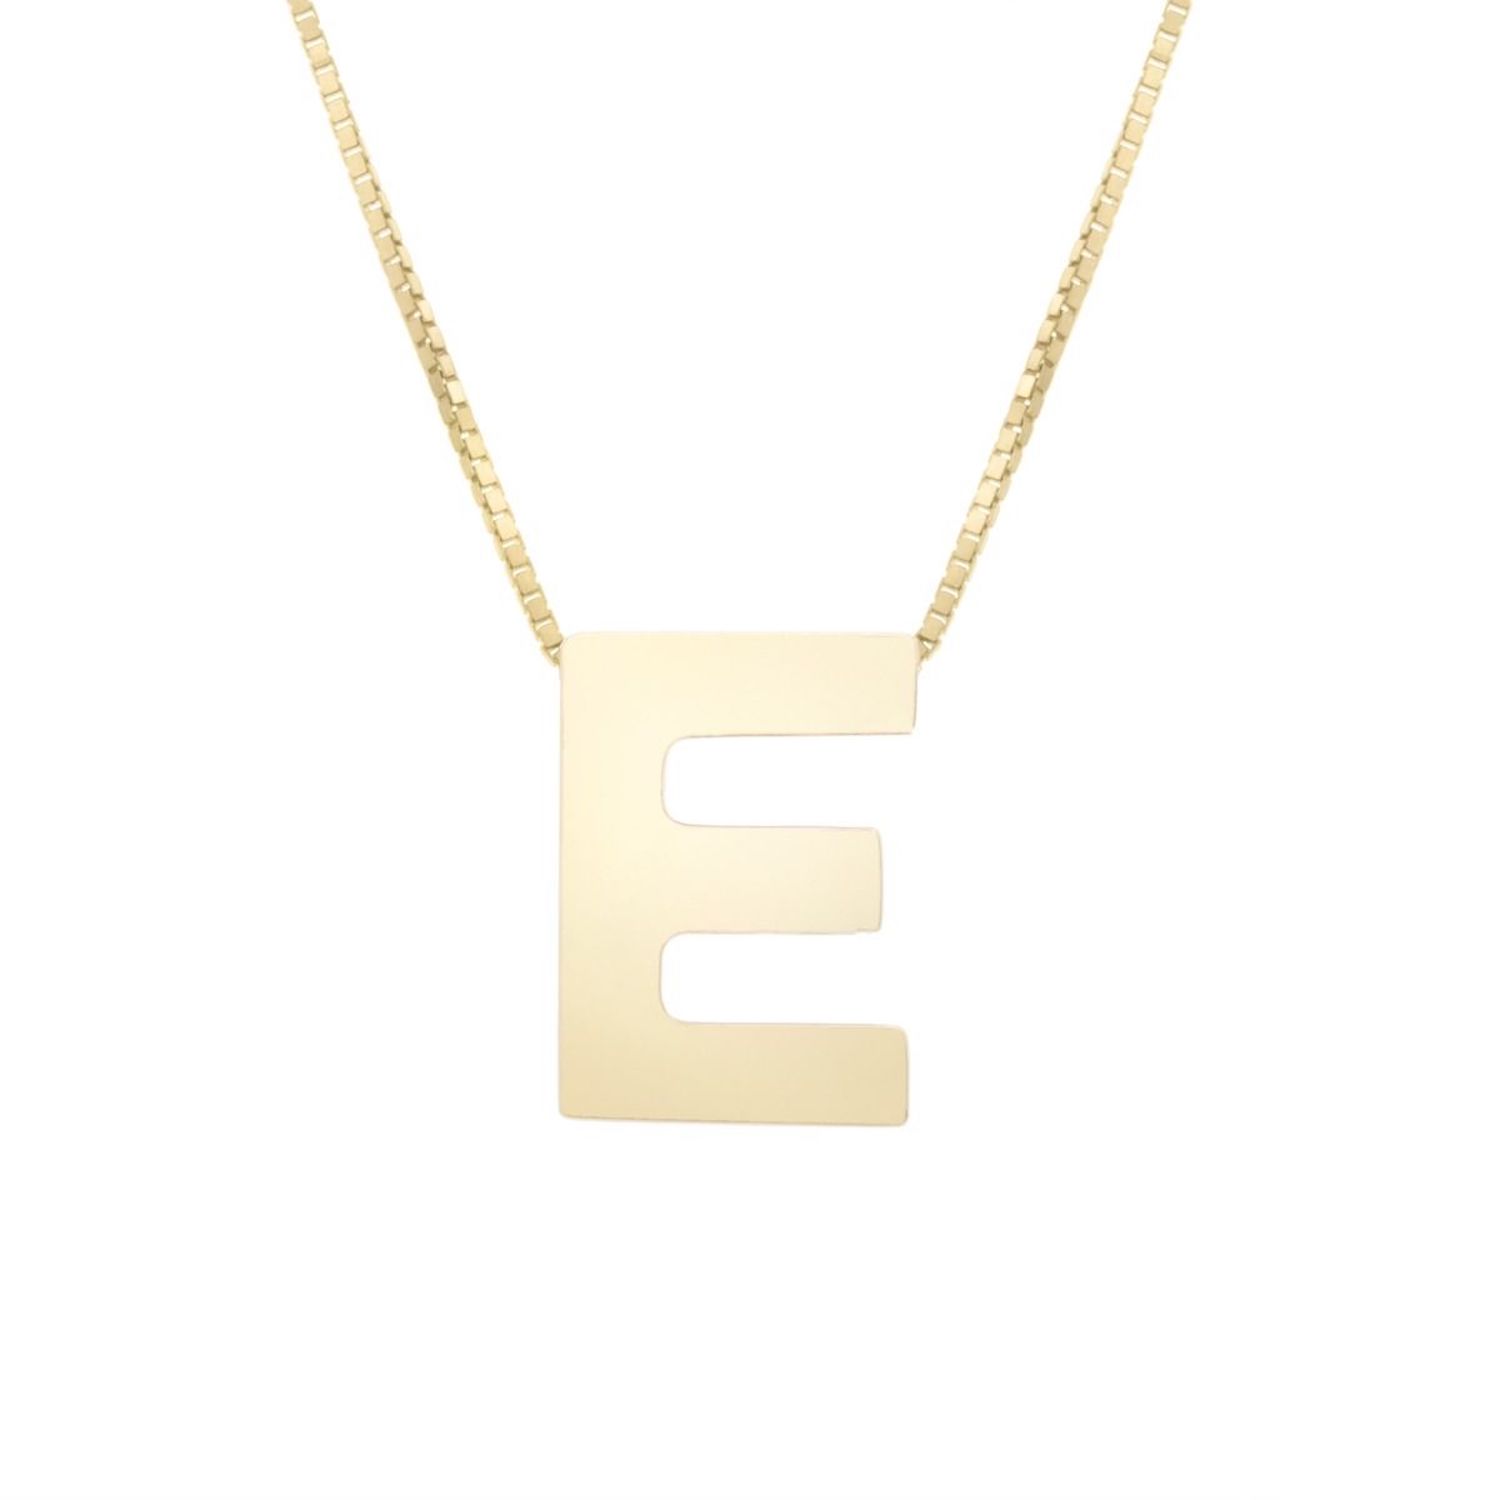 14K Yellow Gold Block Letter Initial Pendant Box Chain Necklace 16"-18" - E